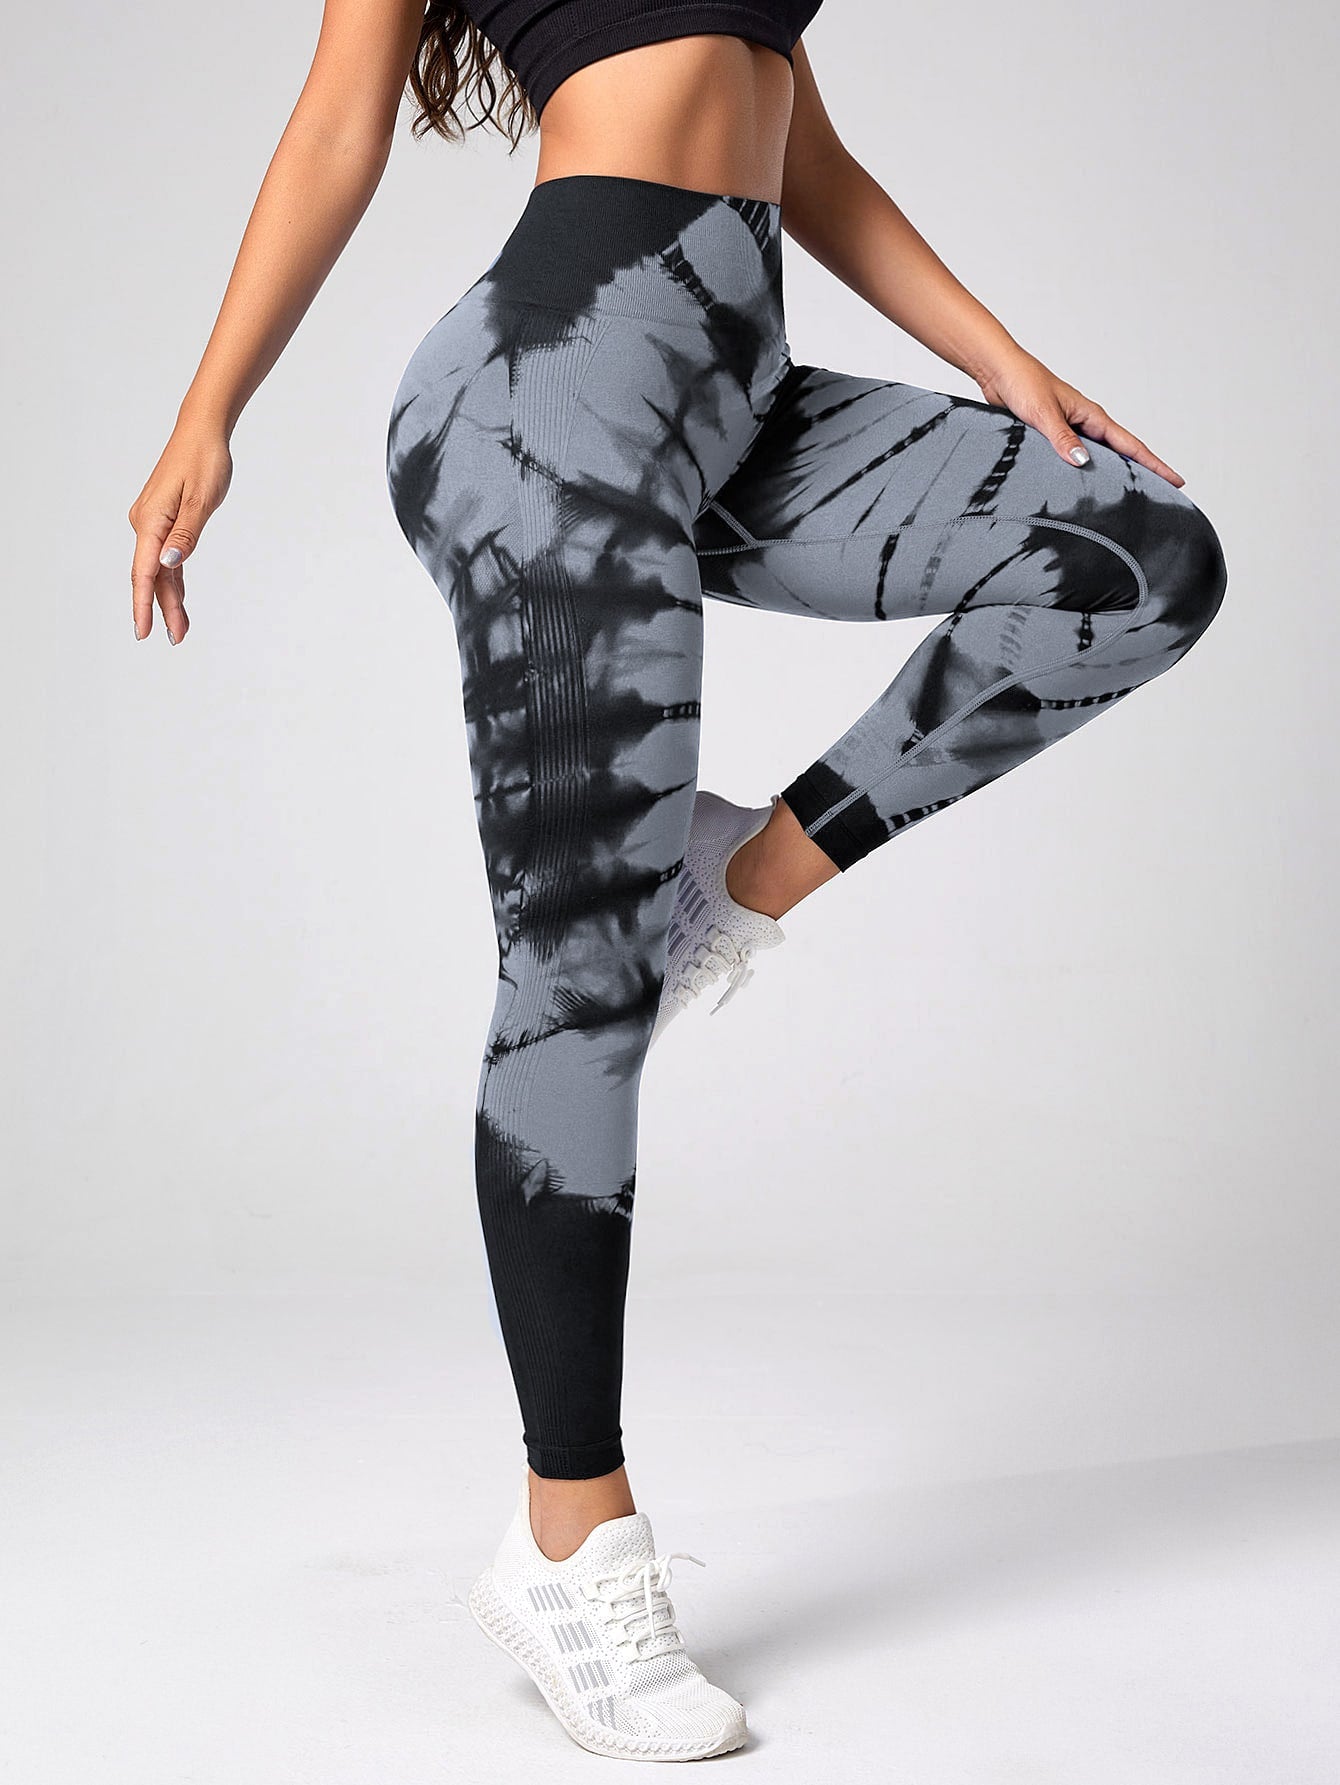 Seamless Leggings for Women Fitness Yoga Pants High Waist Tie Dye Legging Workout Scrunch Butt Lifting Sports Gym Tights Woman   56.99 EZYSELLA SHOP